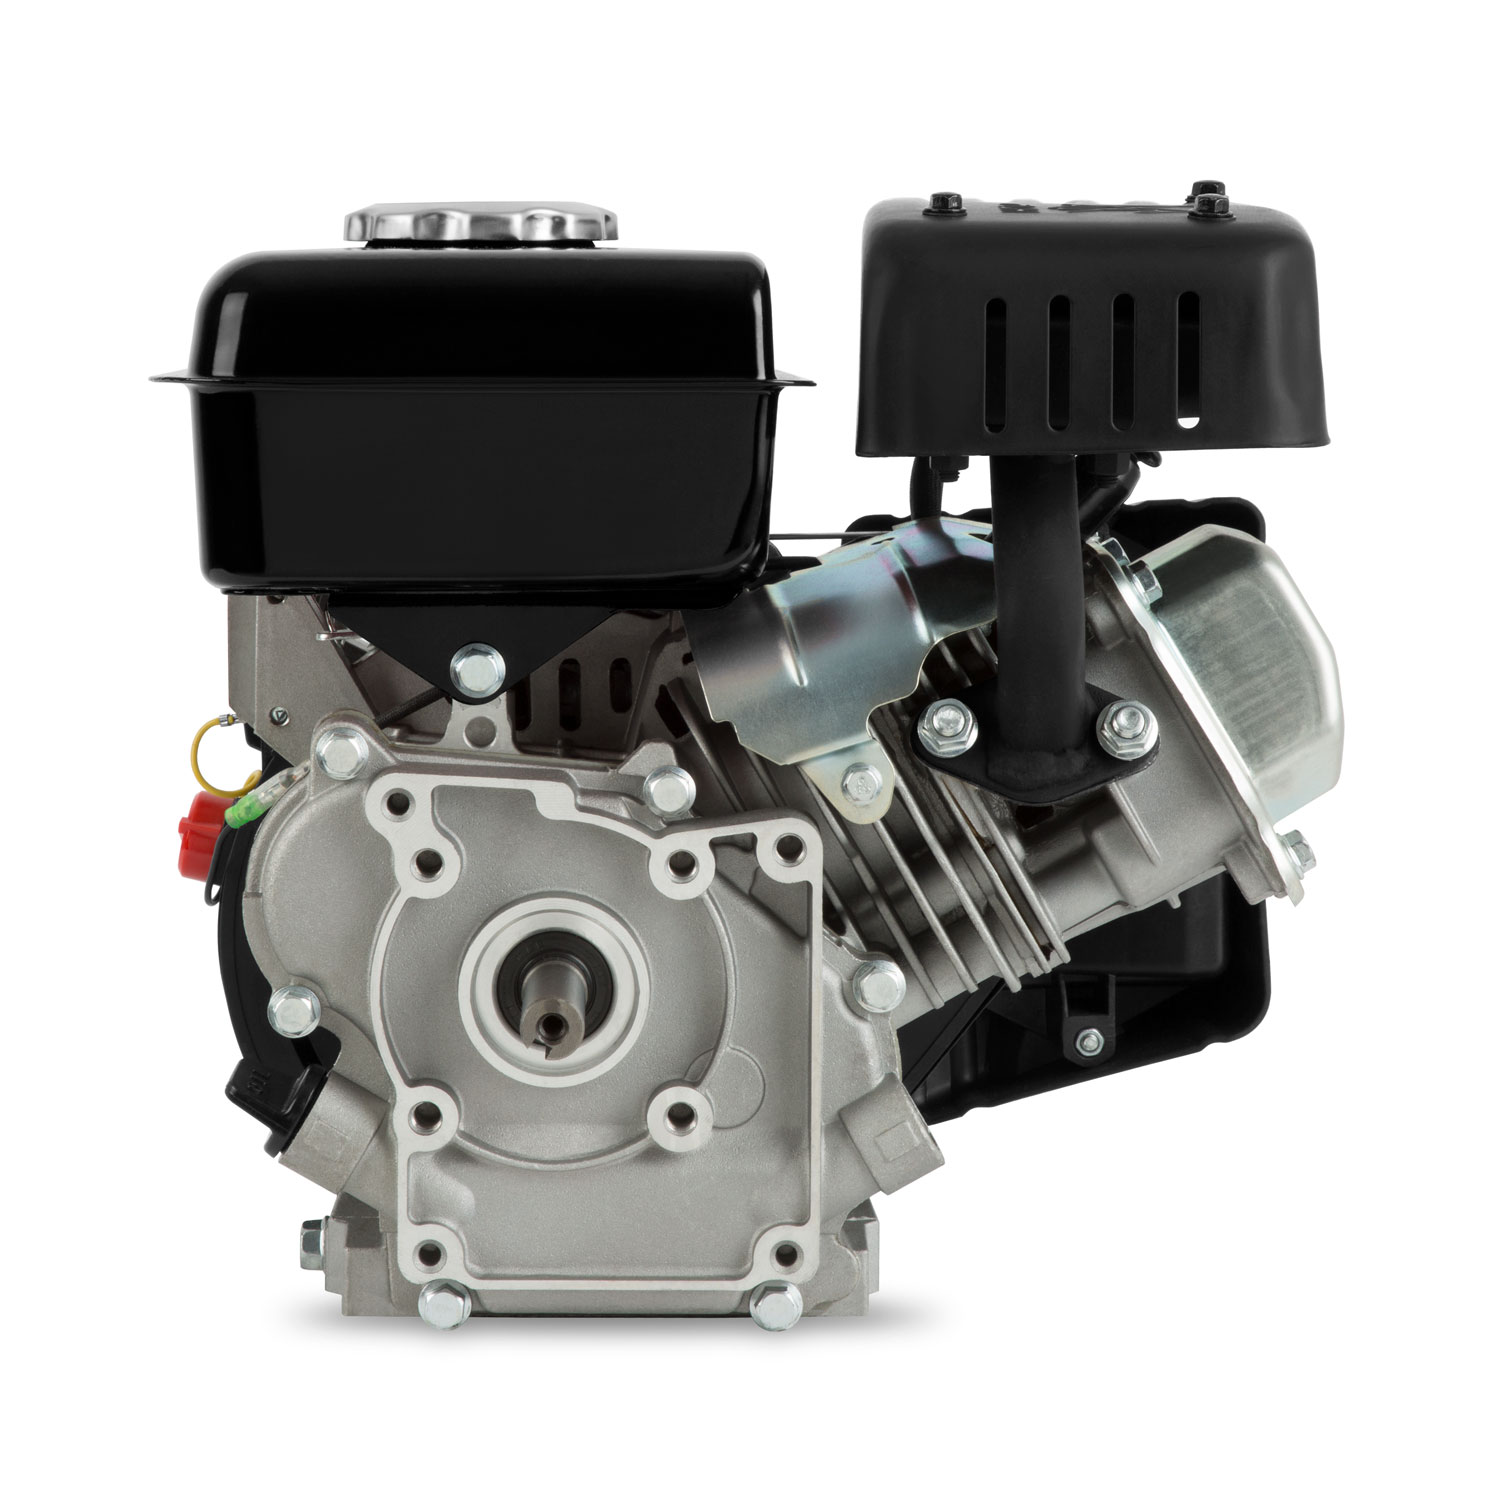 EBERTH 400V Elektromotor, 2,2 kW Leistung, 3-Phasen